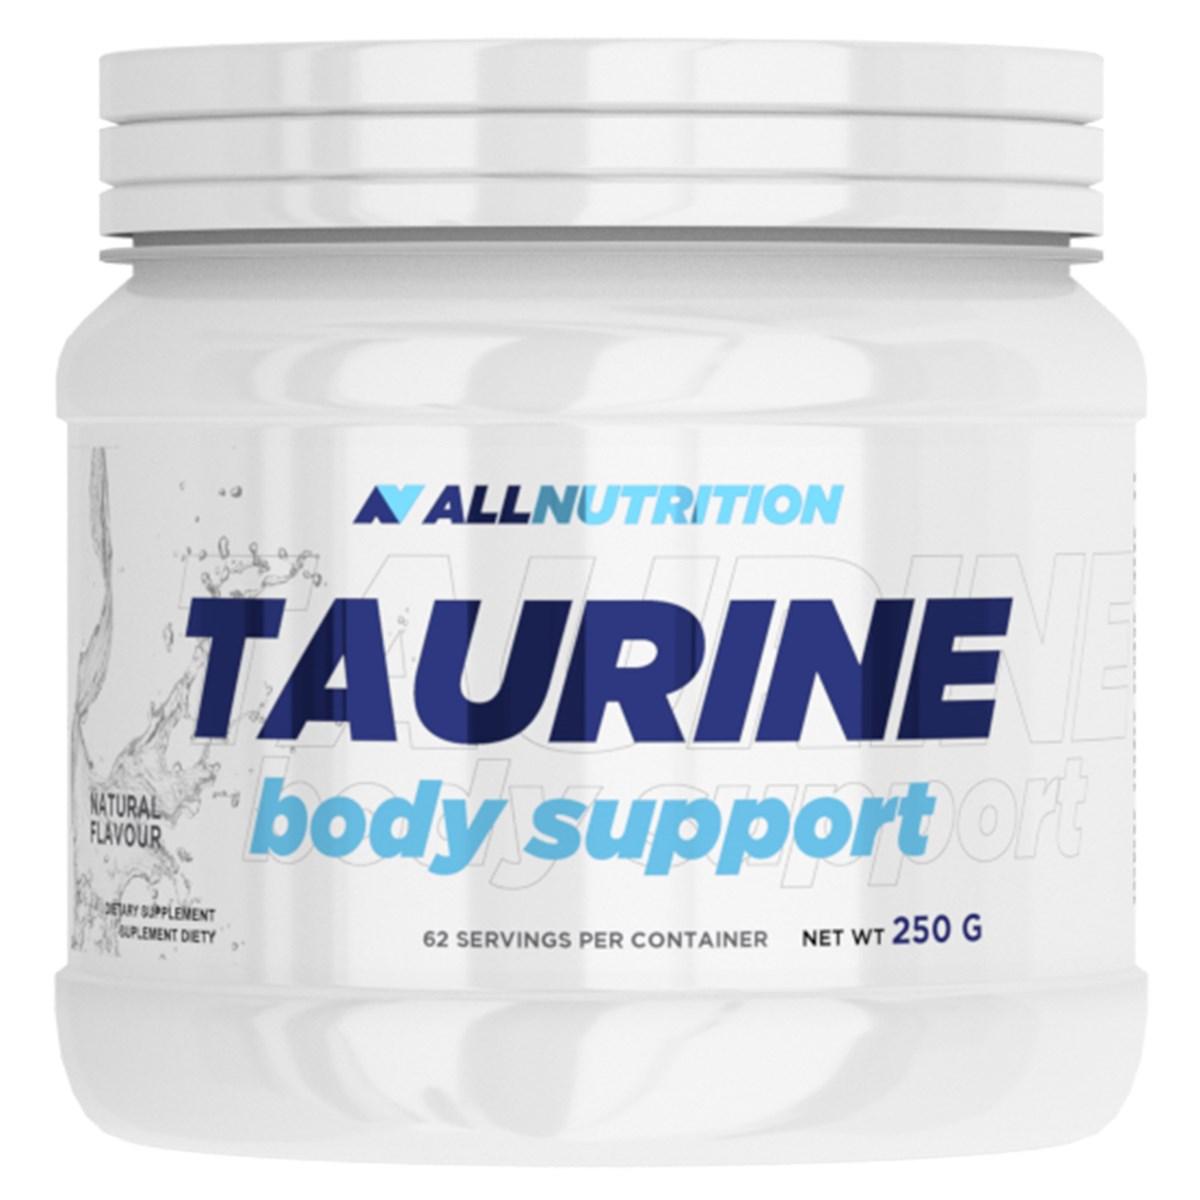 Таурин AllNutrition Taurine Body Support (250 г) олл нутришн,  мл, AllNutrition. Таурин. 